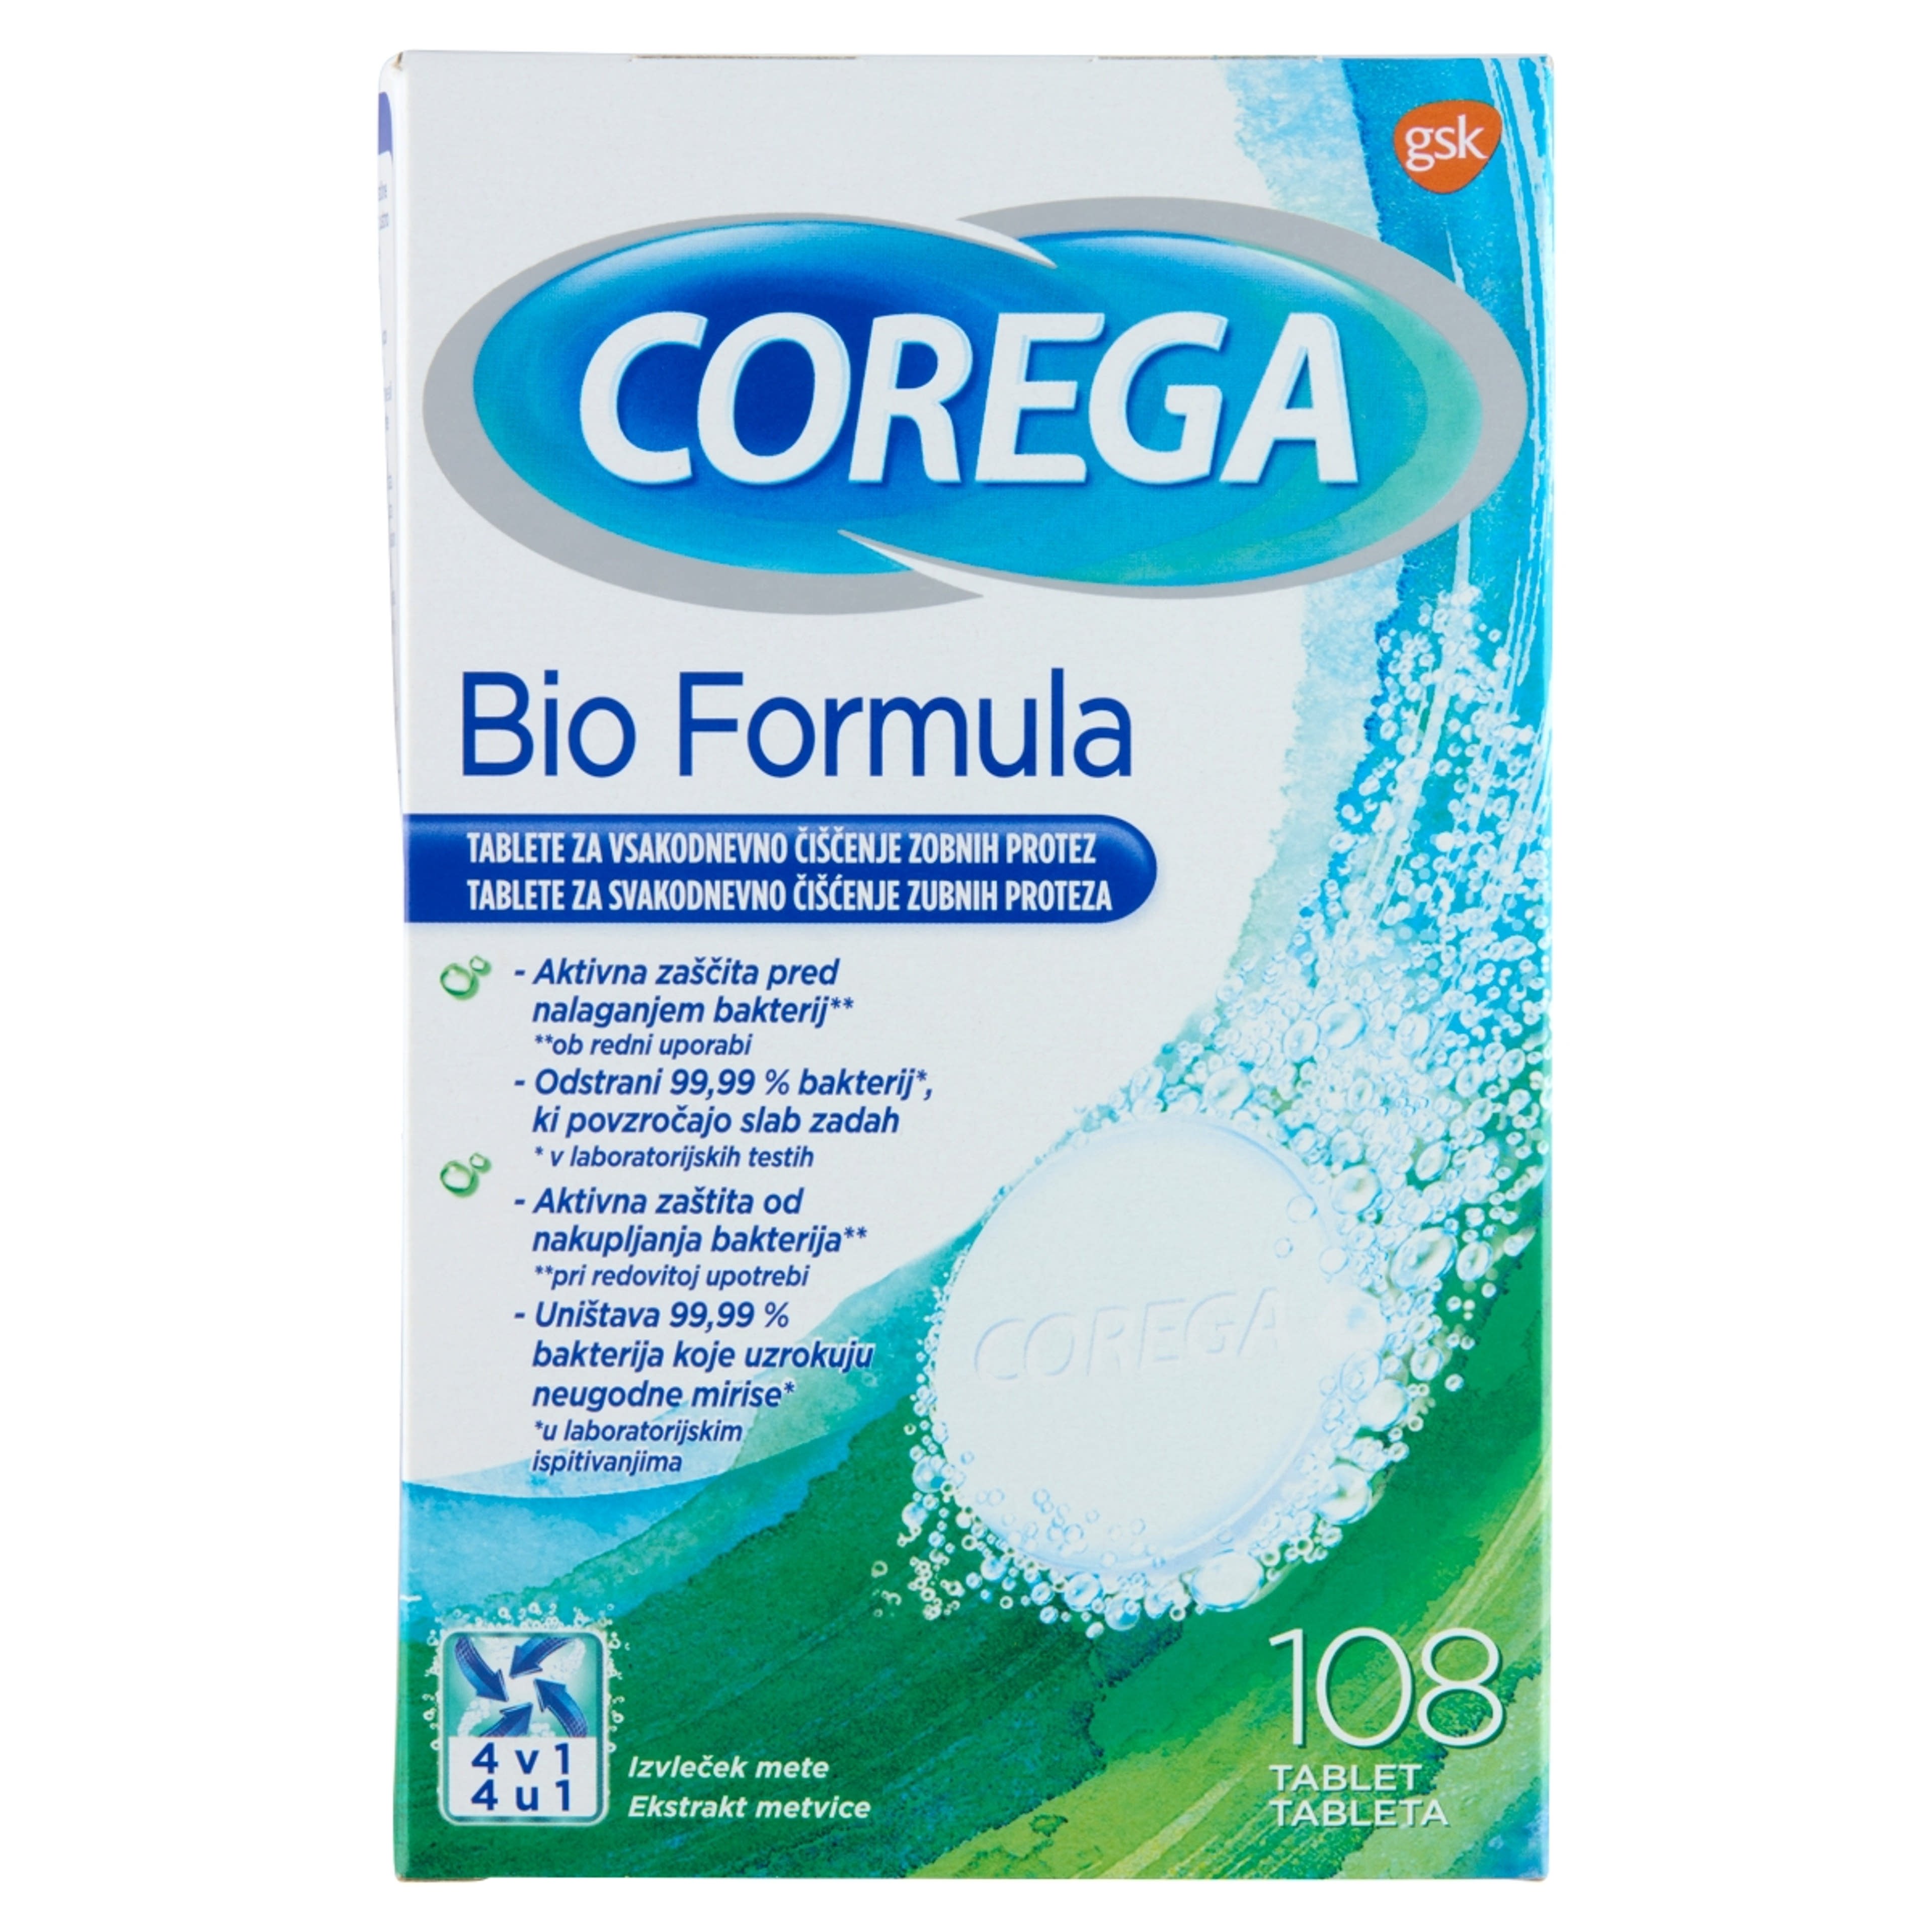 Corega Bio Formula műfogsortisztító tabletta - 108 db